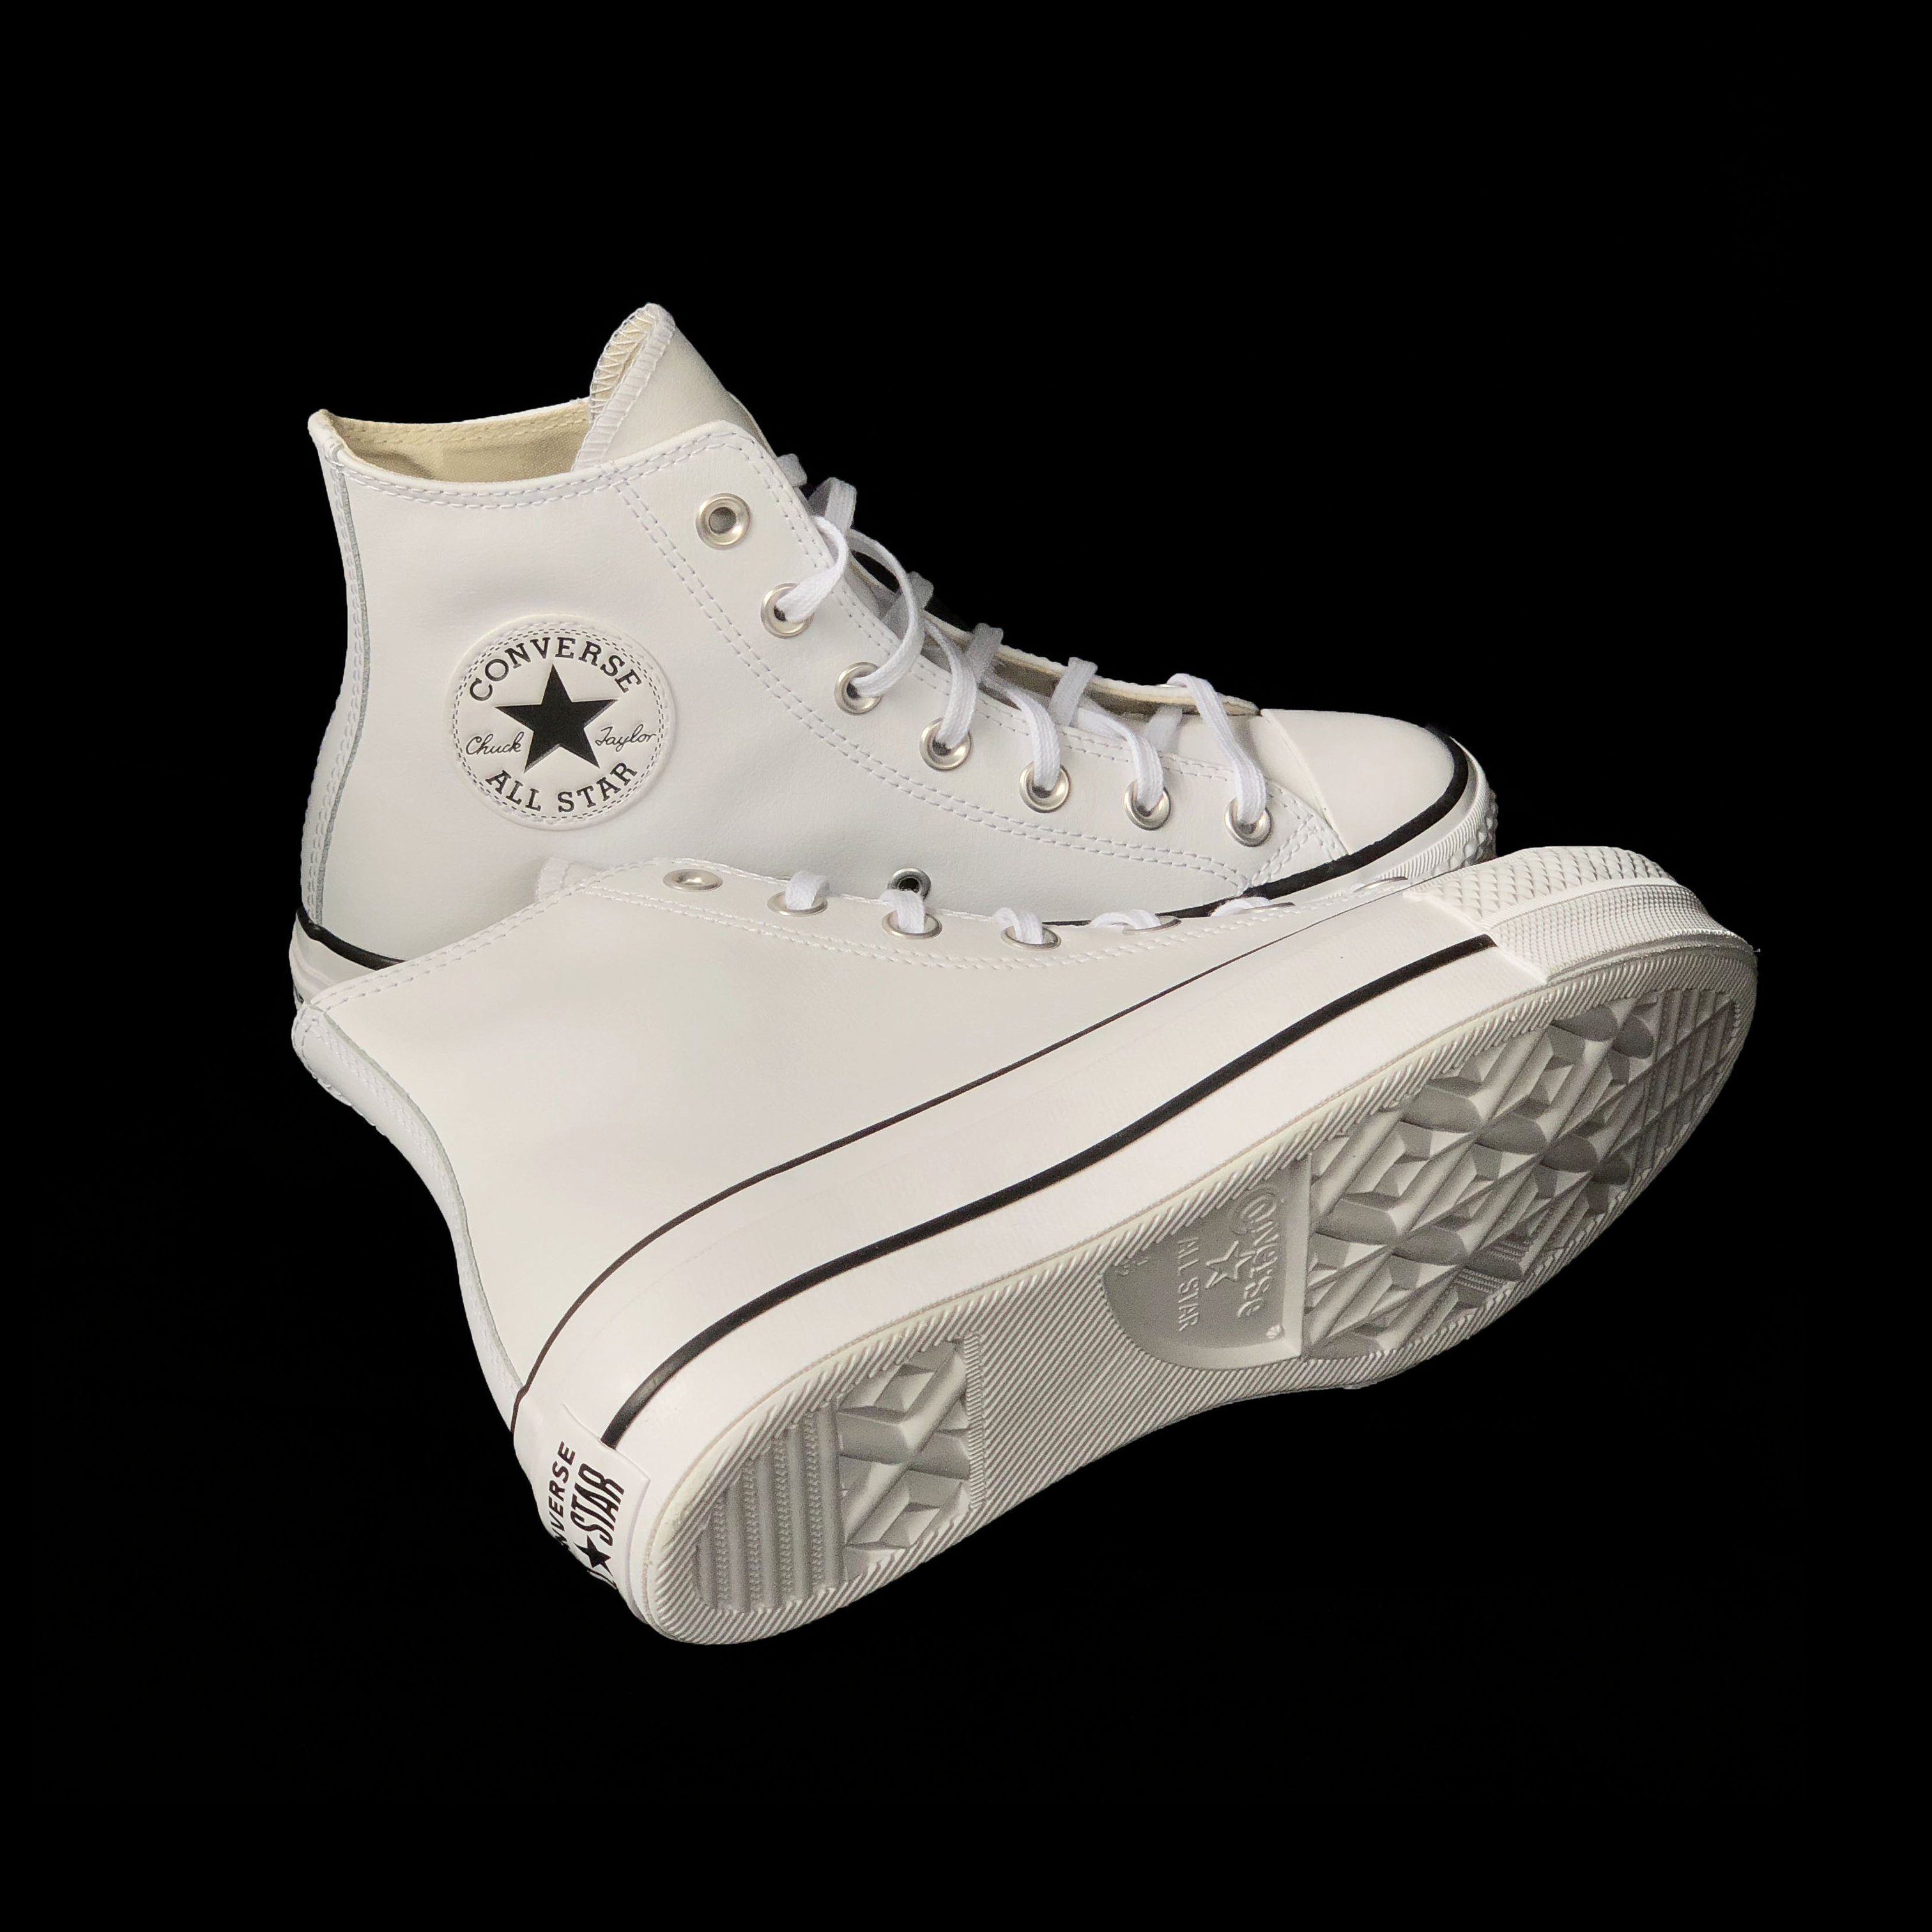 ConverseConverse สีขาวหนา soled รองเท้าผู้หญิงสูงต่ำรองเท้าผ้าใบ561676C 560846C